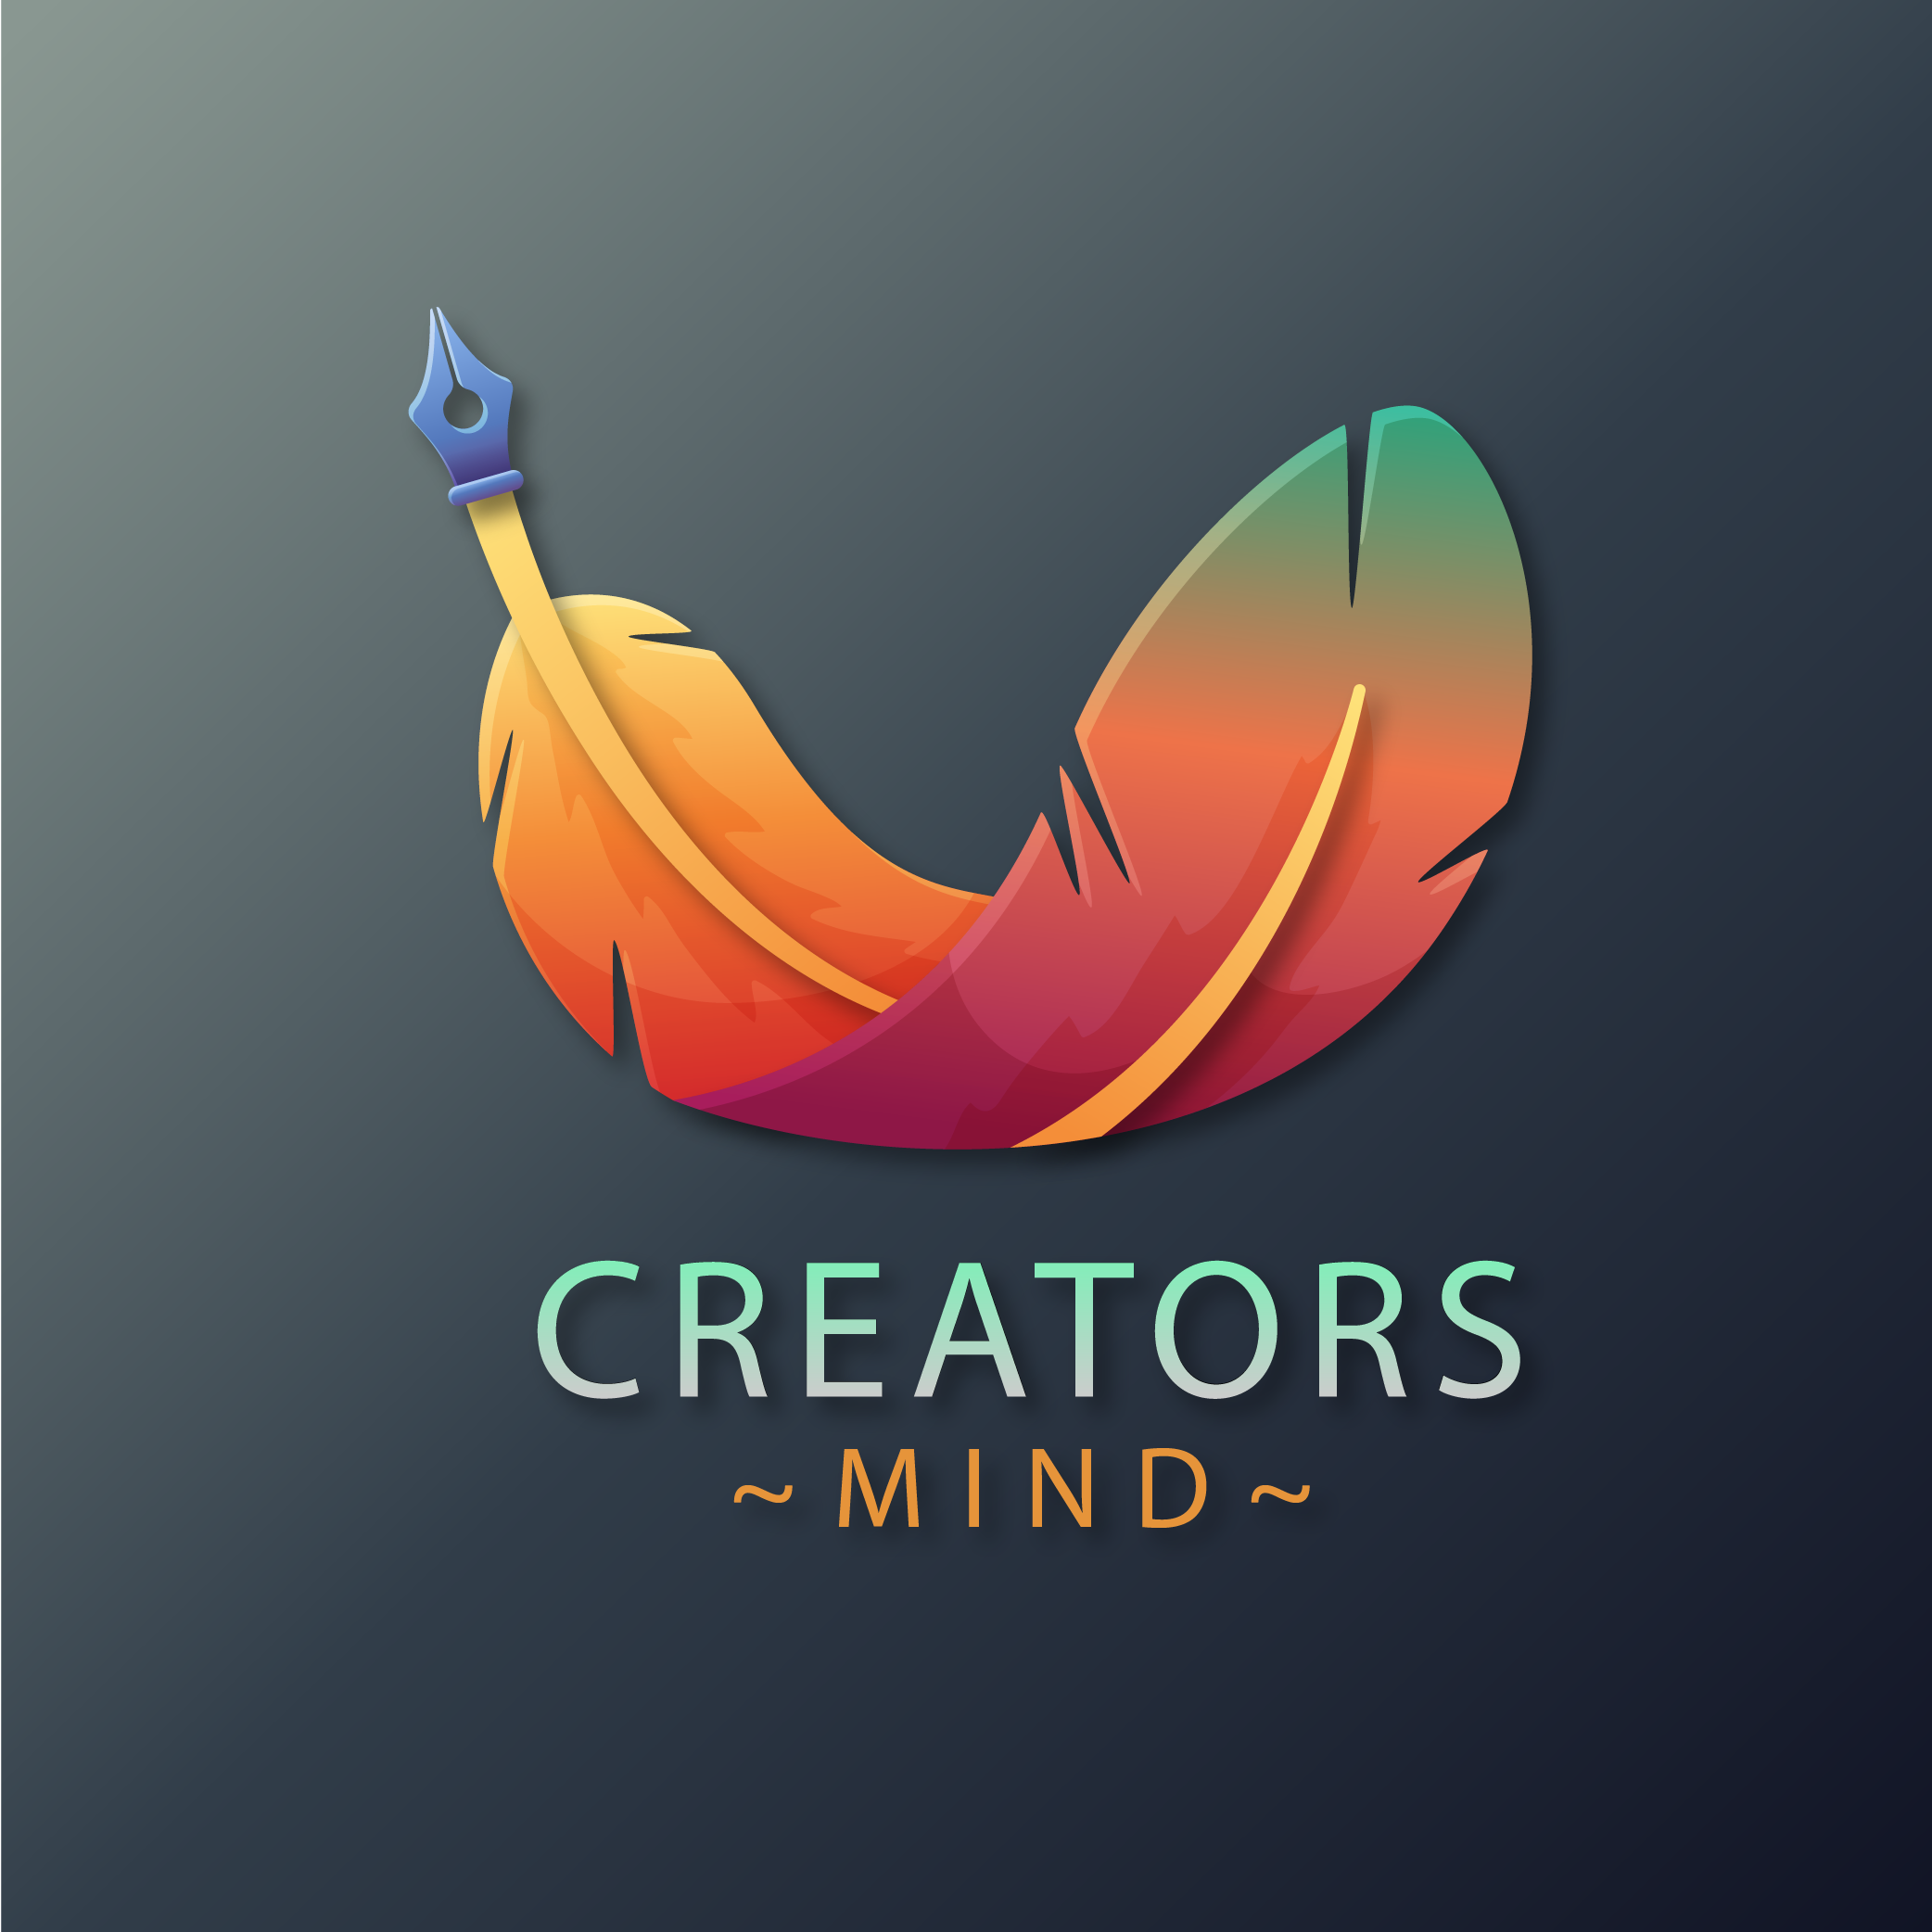 100,000 Mind logo Vector Images | Depositphotos